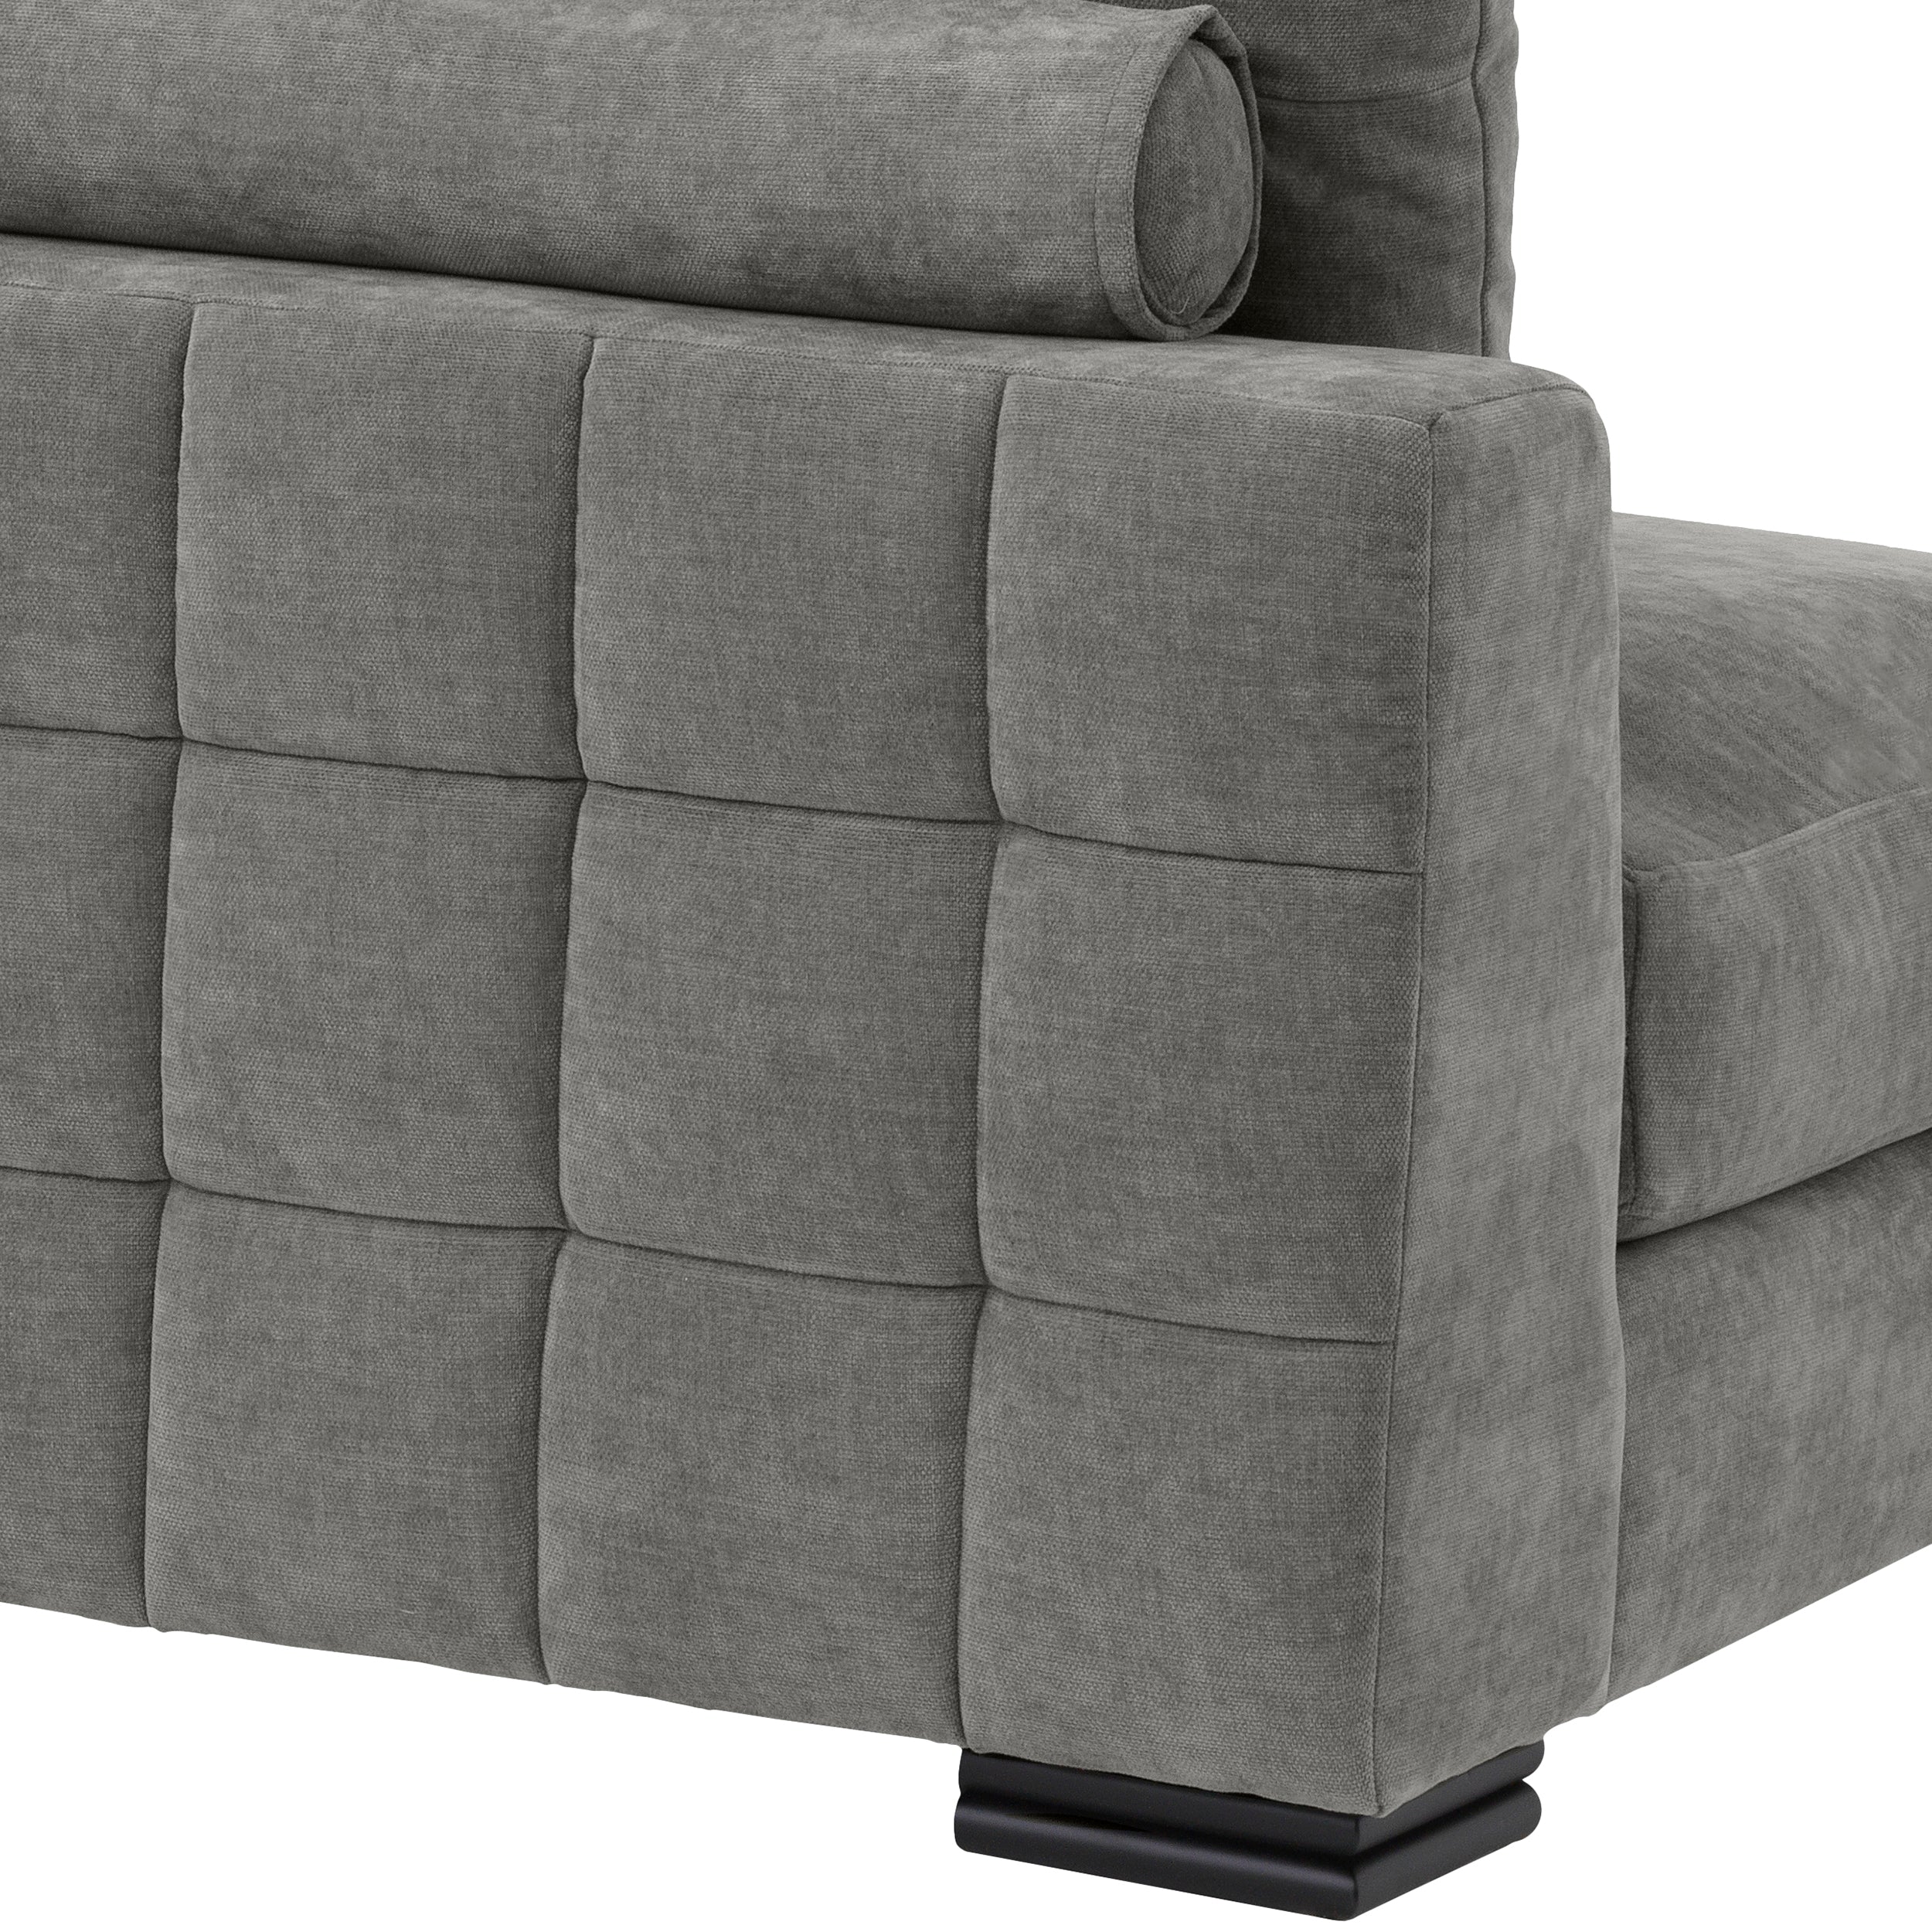 Sofa Clifford 2-zitter - Clarck grey